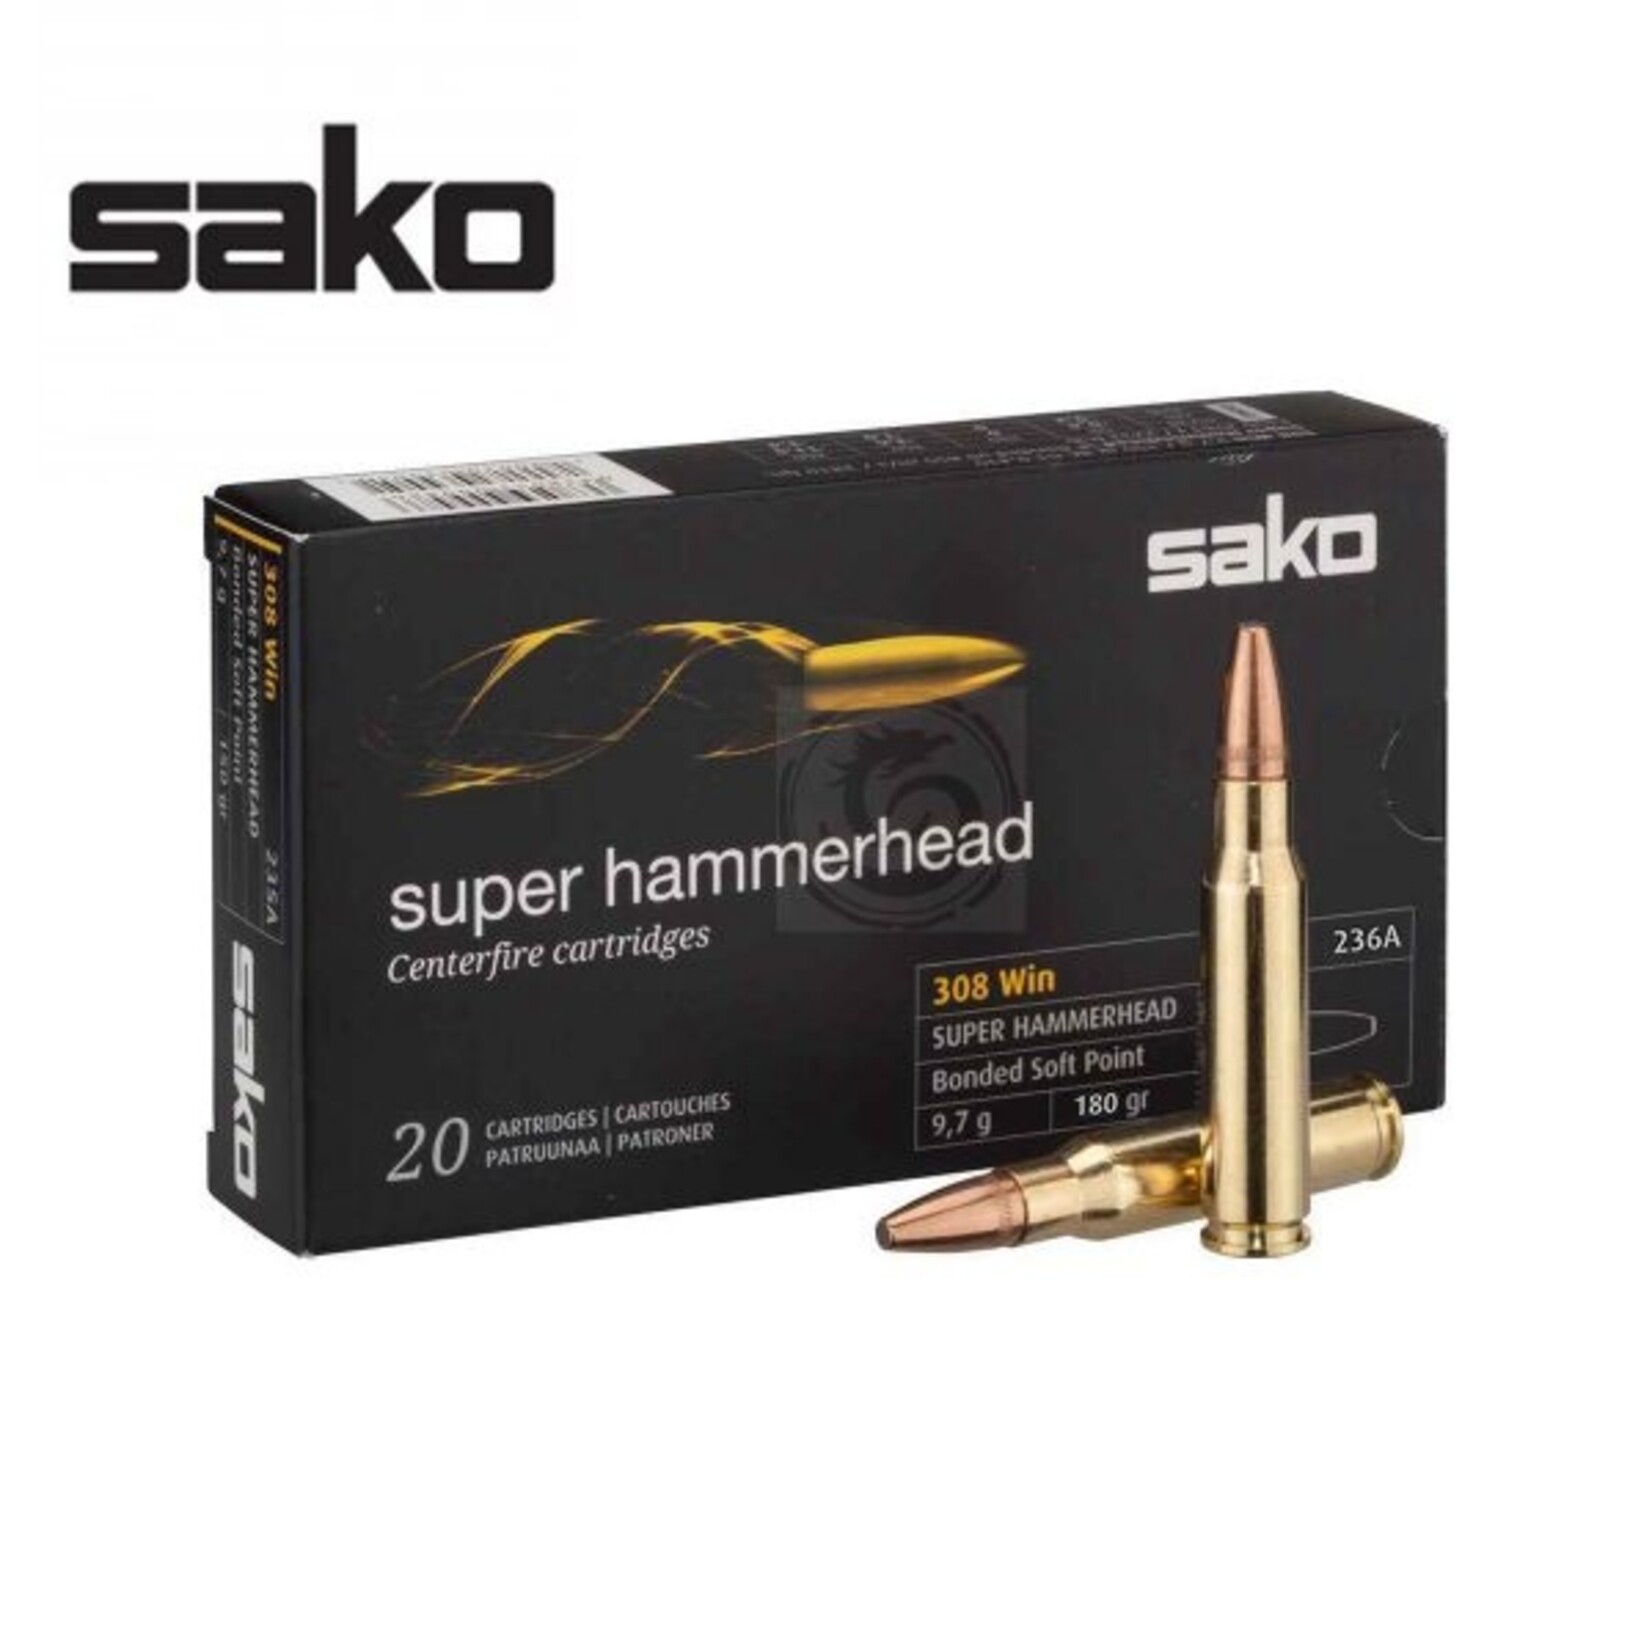 Sako Cartridges Sako Suphamhd 308Win 236A/180Gr